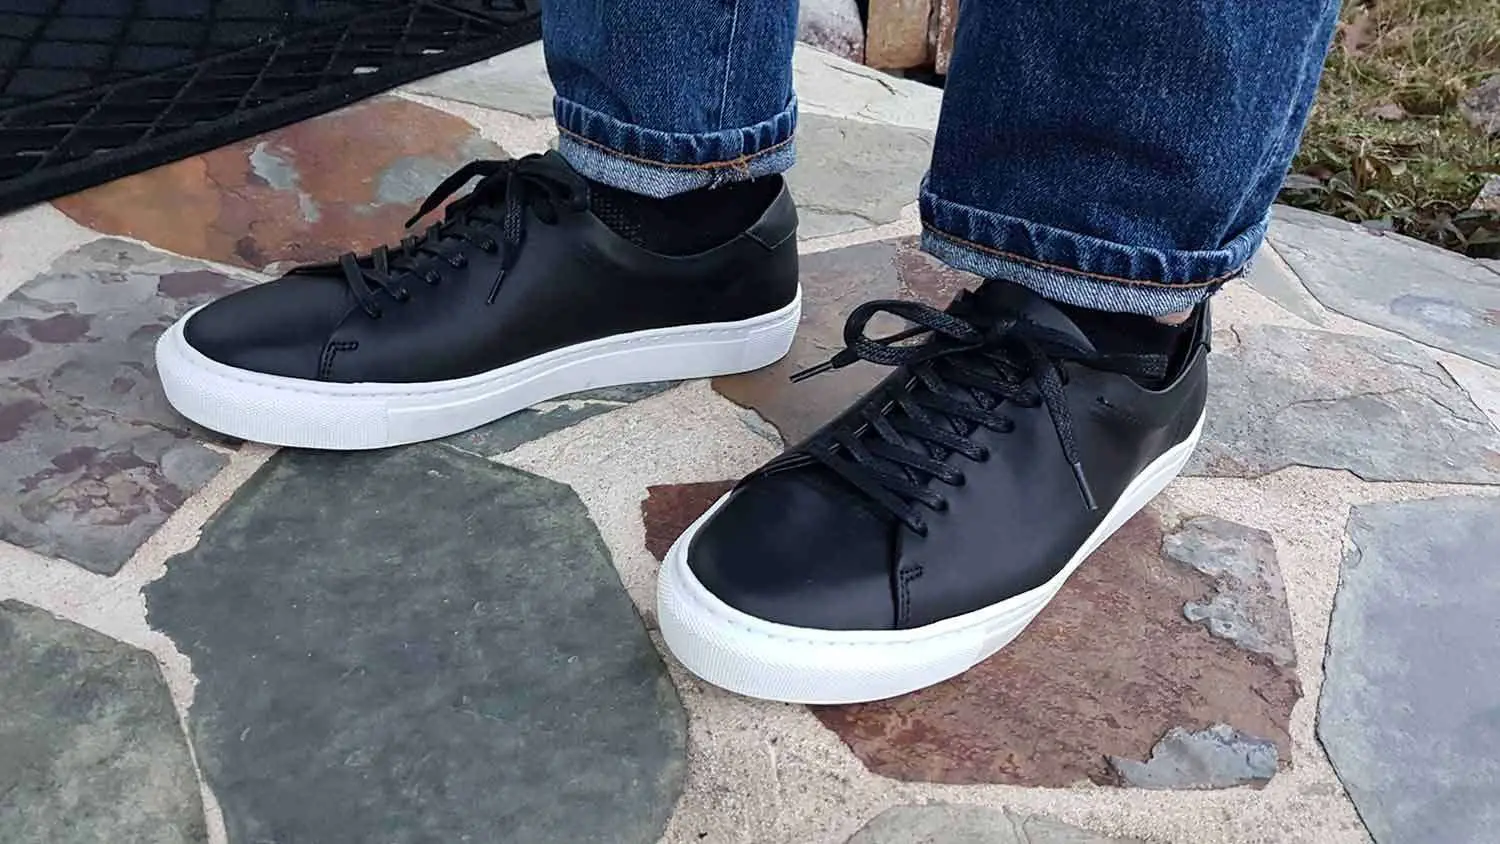 Beckett Simonon Reid Low Top Sneaker Review: Minimalist Leather Shoes ...